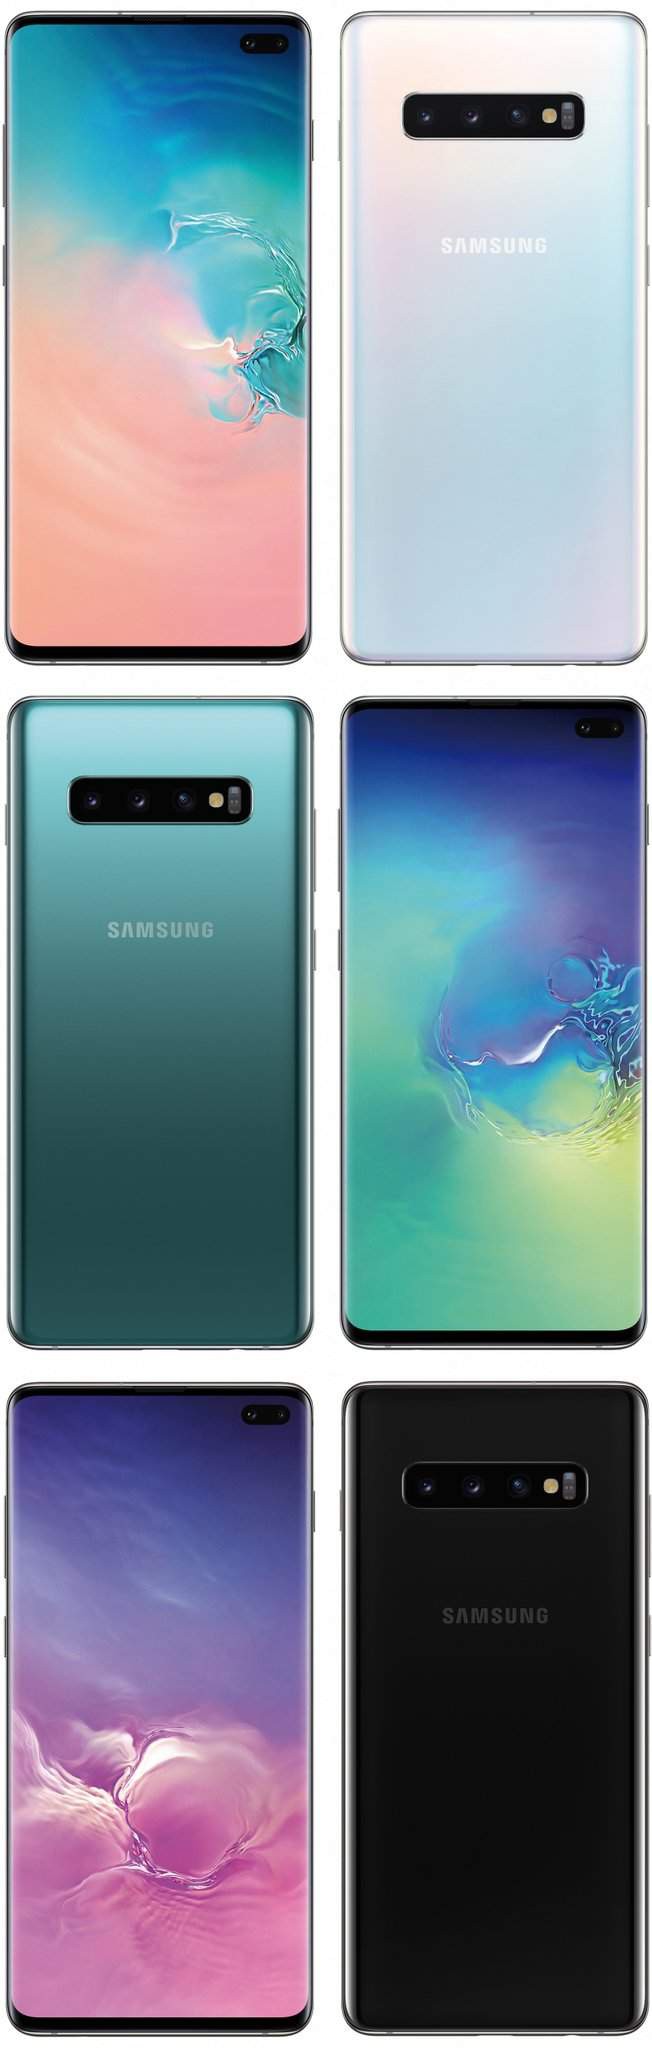 Samsung Galaxy S10 и Samsung Galaxy S10e на новых фотографиях